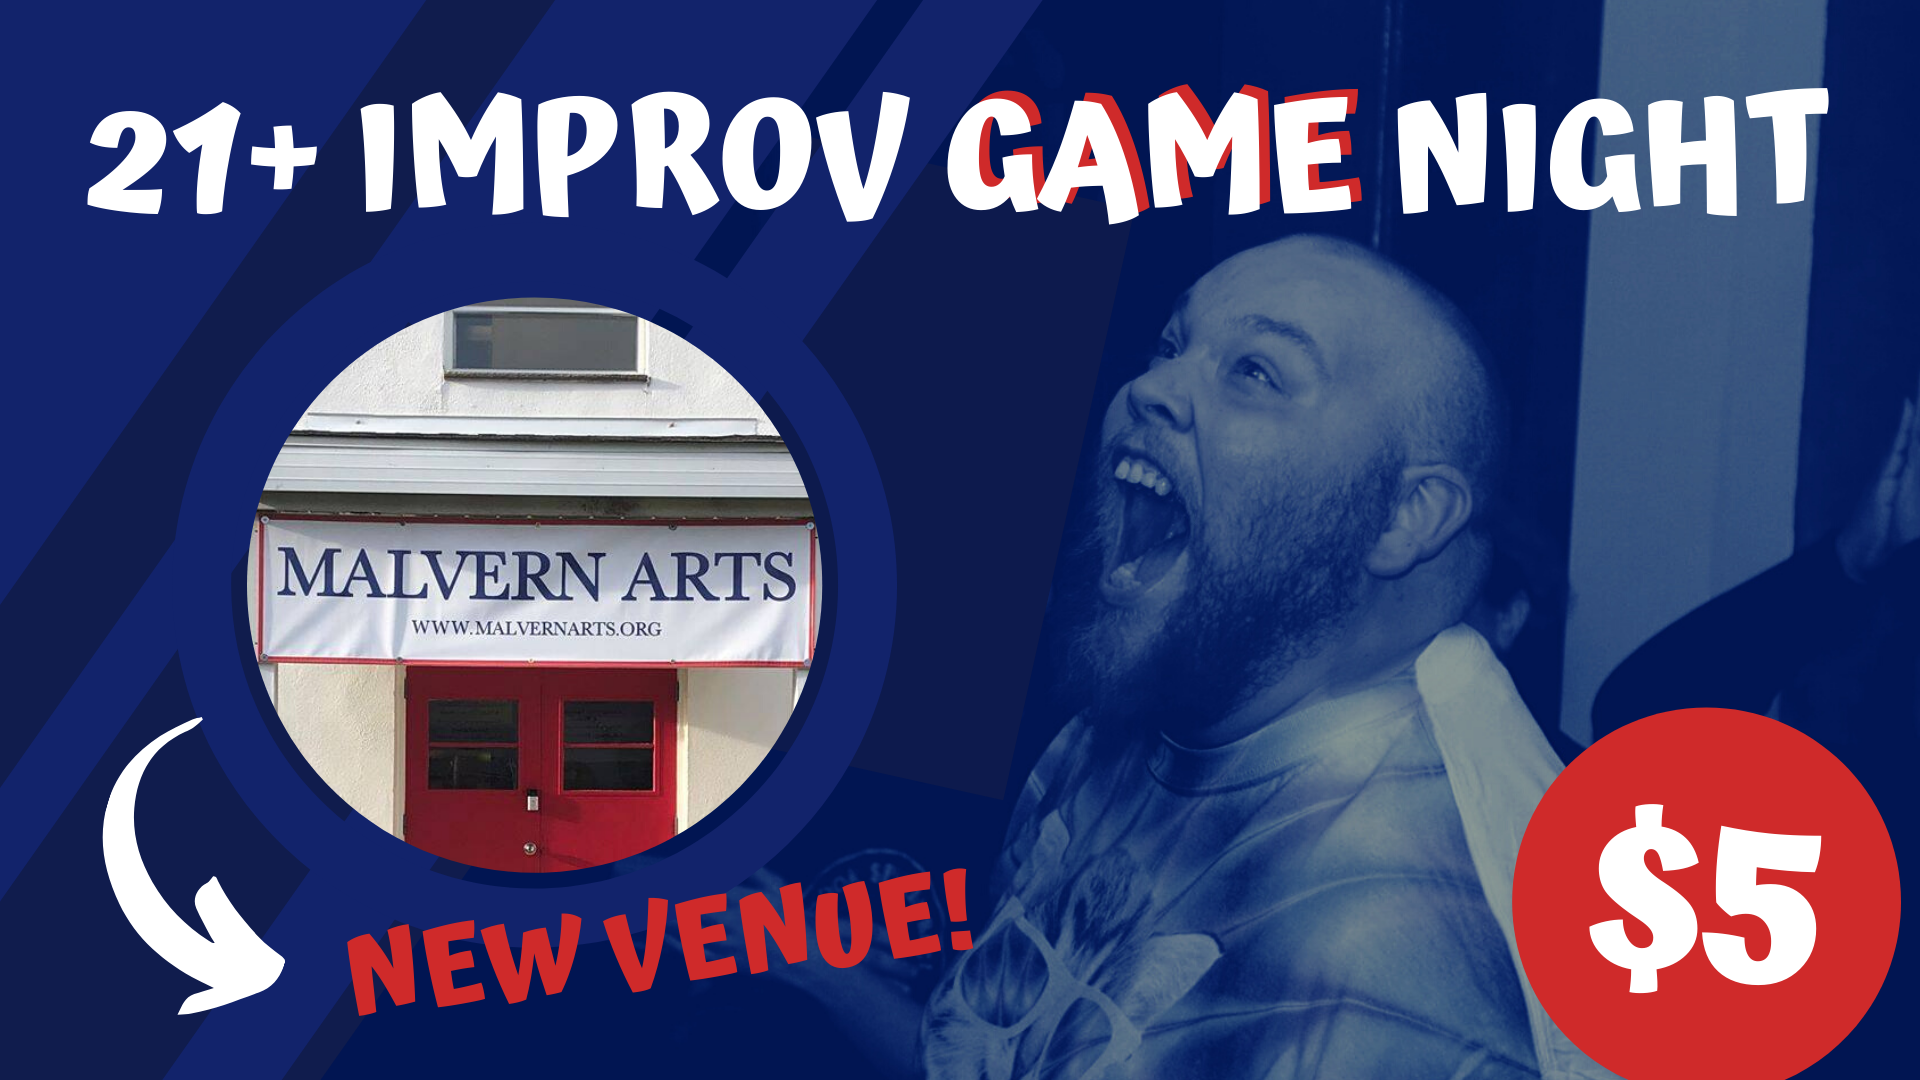 21+ Improv Game Night at Malvern Arts!